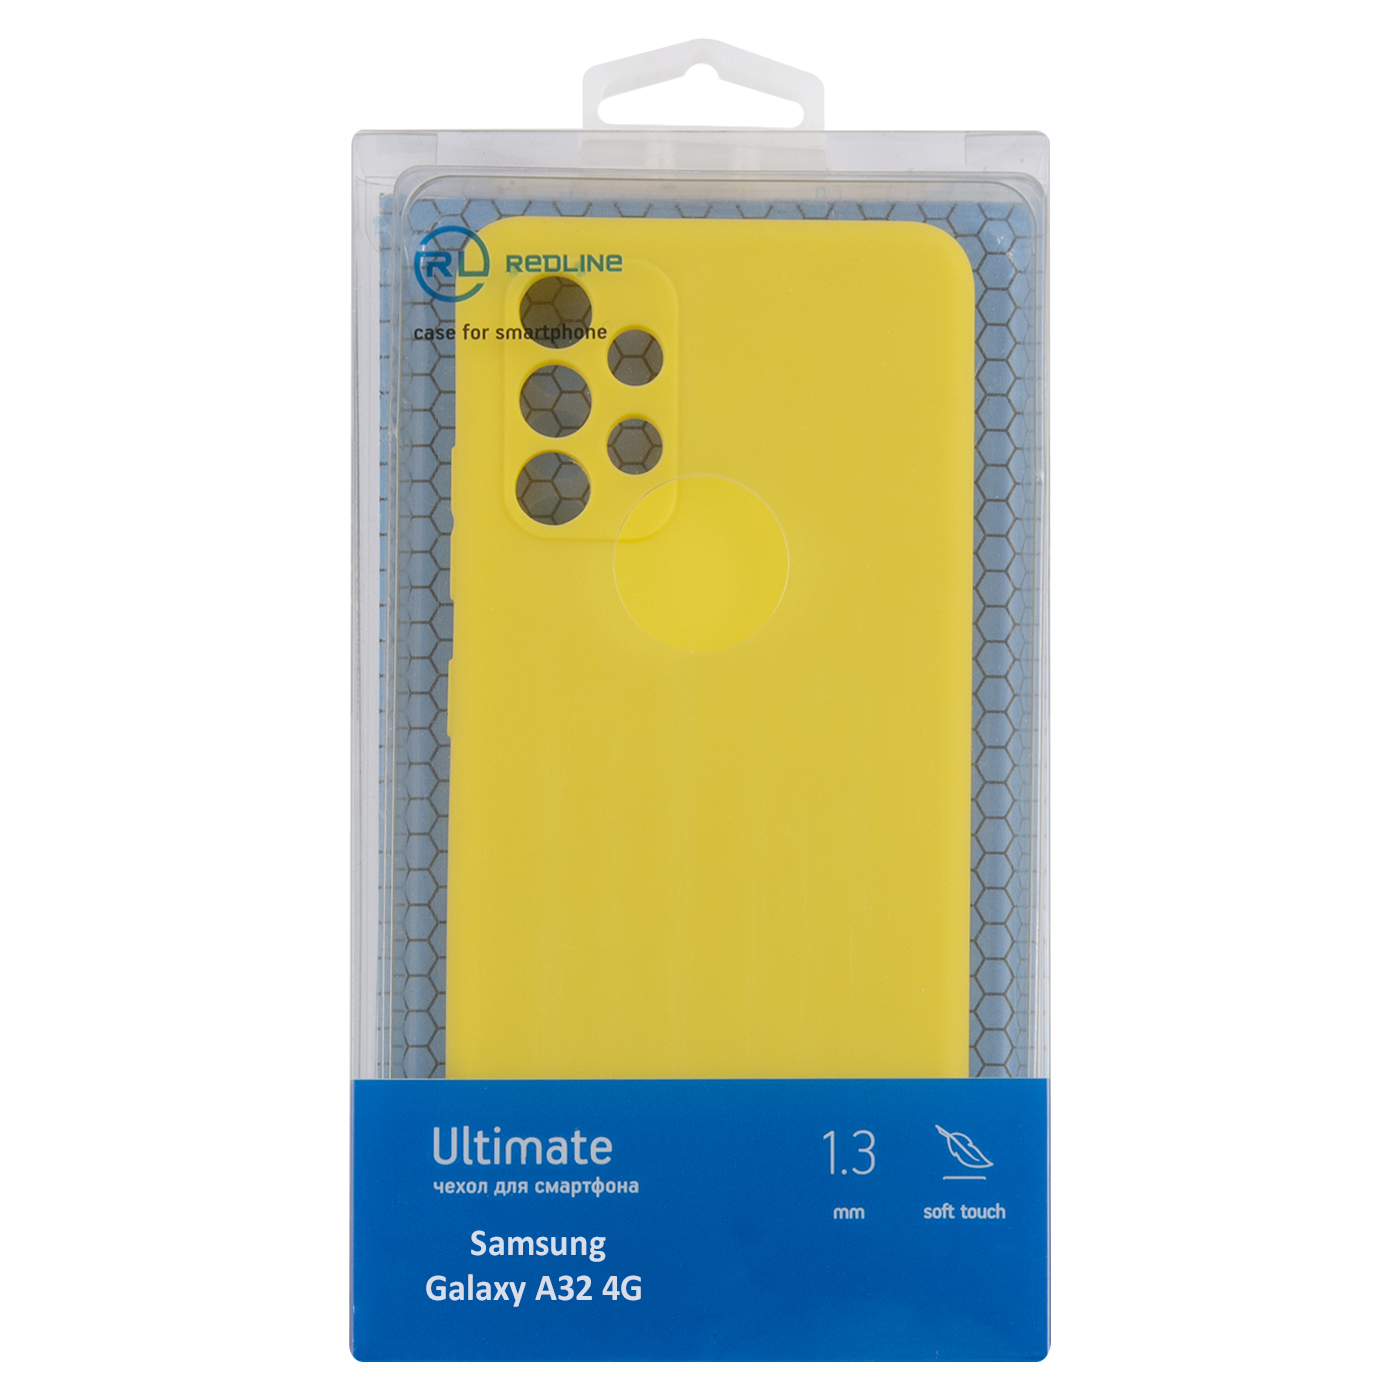 Чехол защитный Red Line Ultimate для Samsung Galaxy A32 4G, желтый УТ000024004 чехол red line для samsung galaxy a32 4g ultimate light blue ут000024003